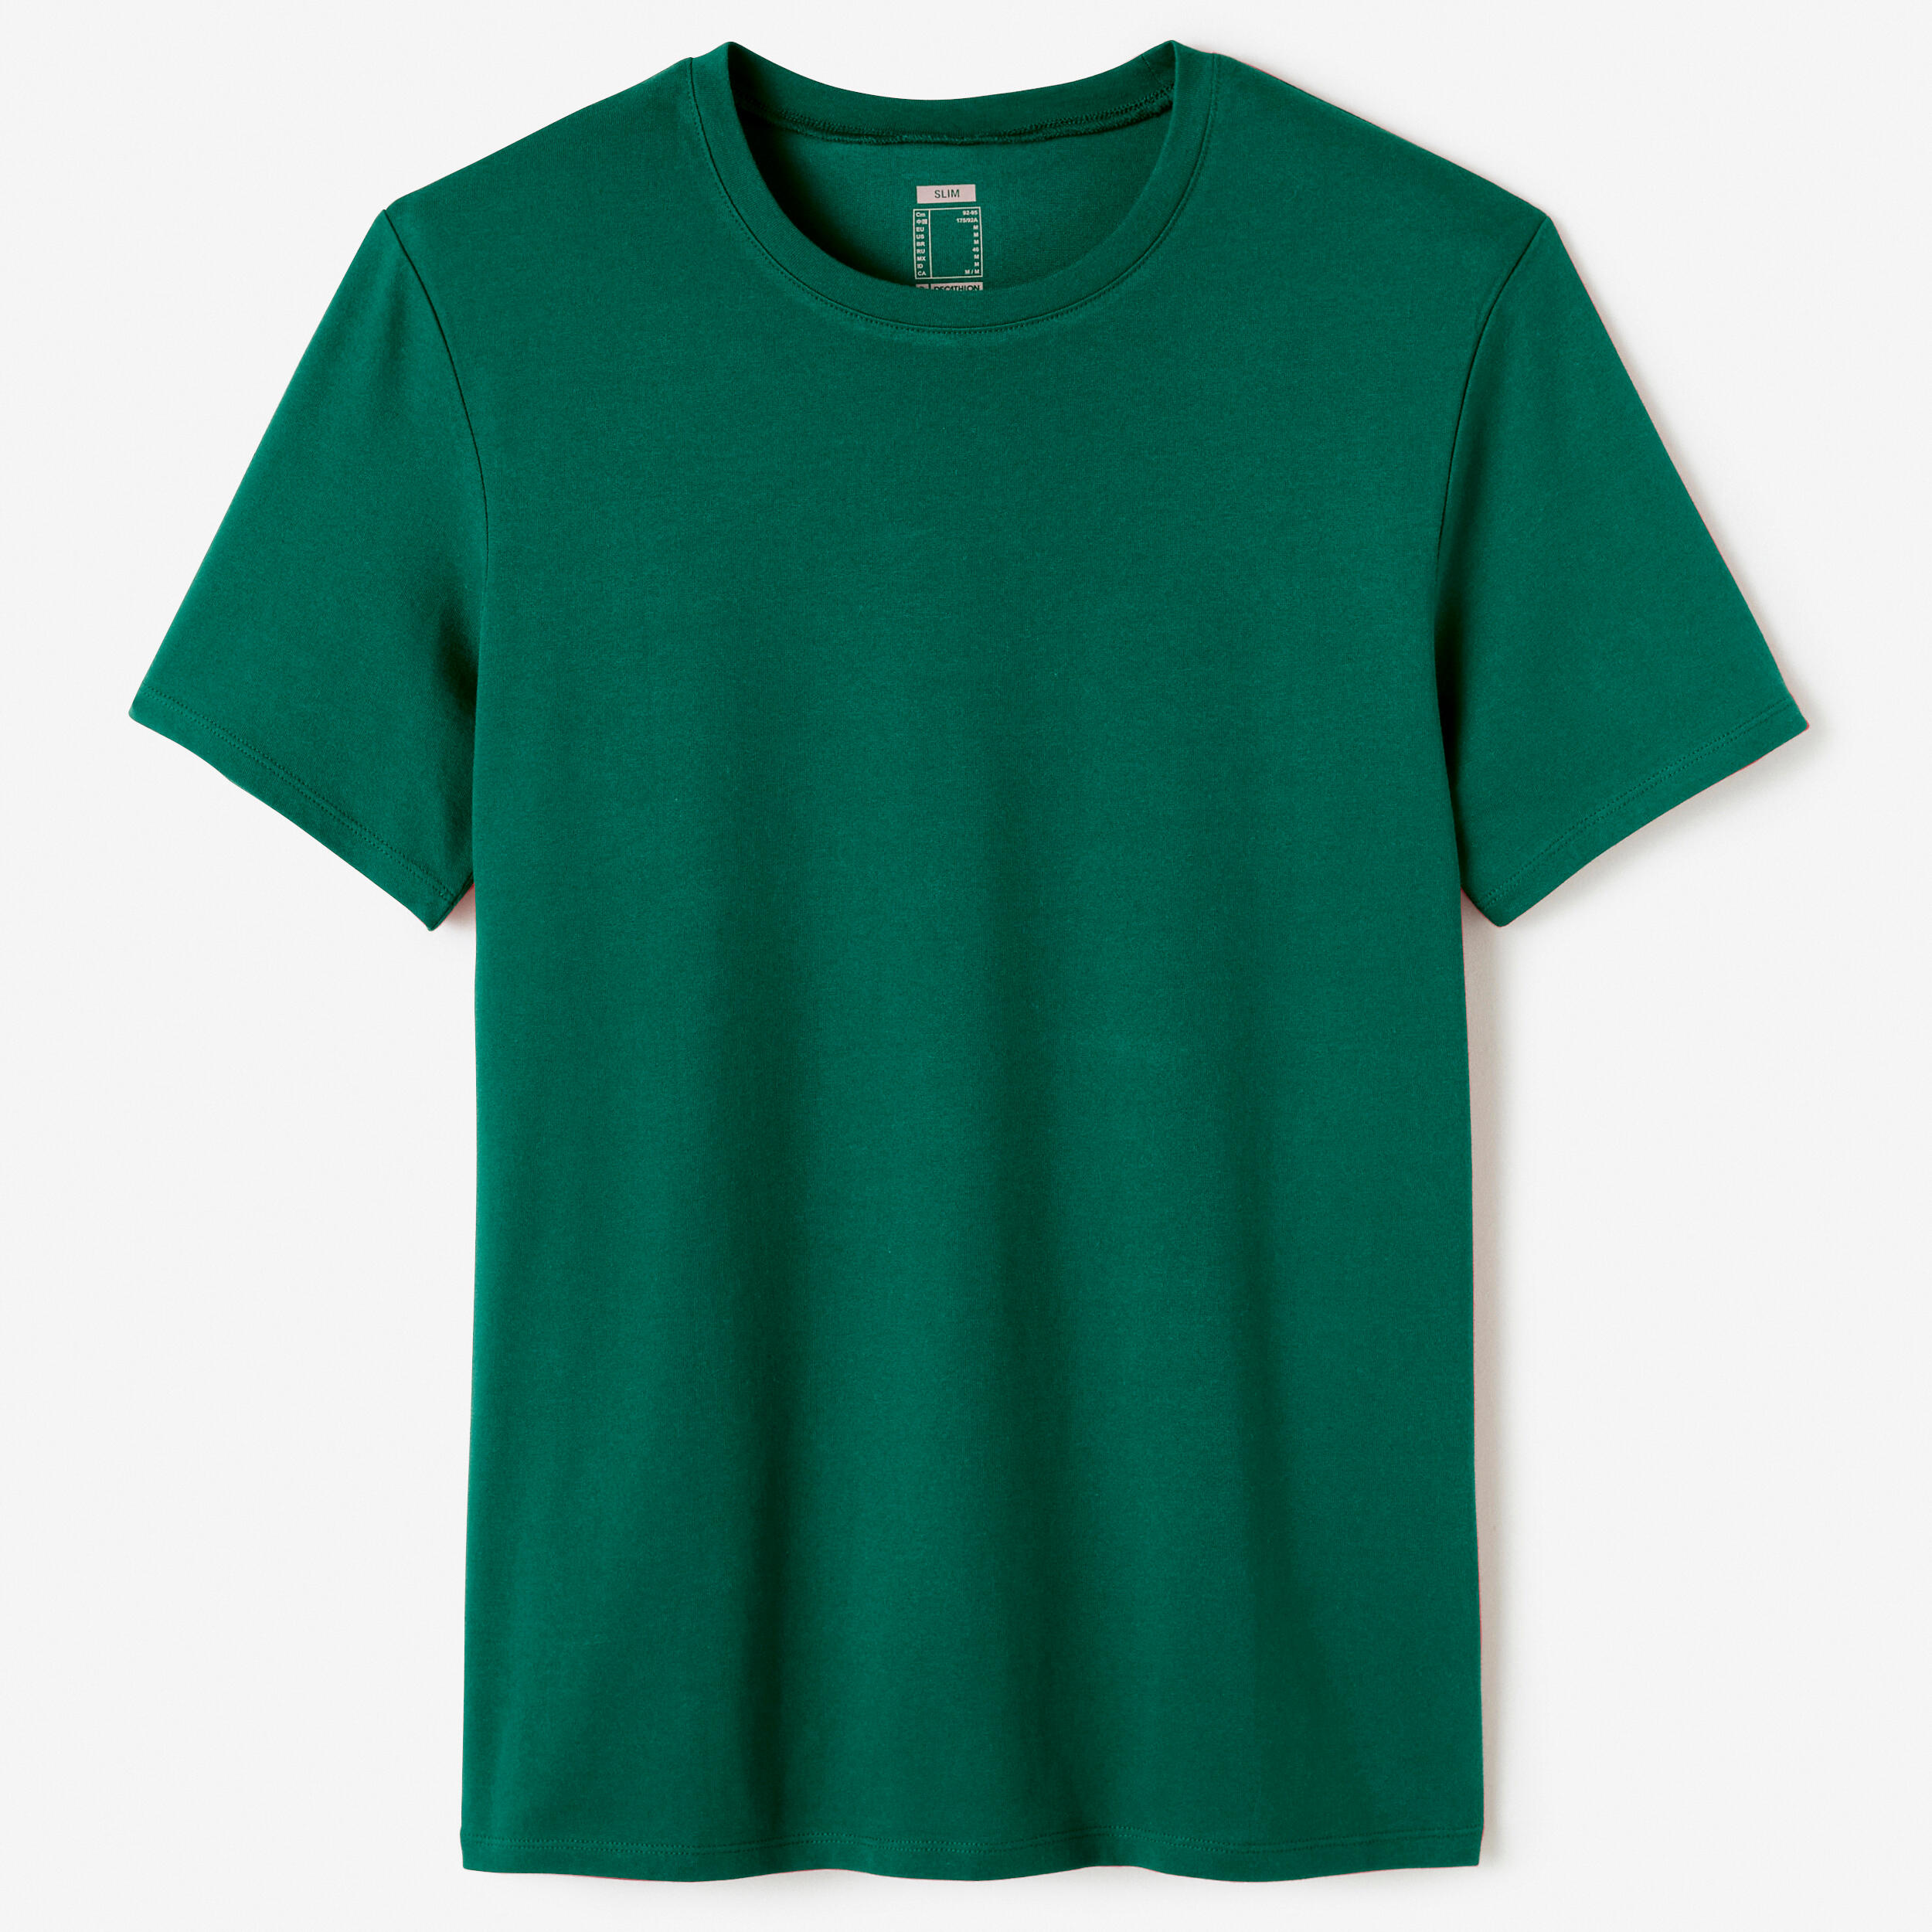 DOMYOS Men's Slim-Fit Fitness T-Shirt 500 - Cypress Green